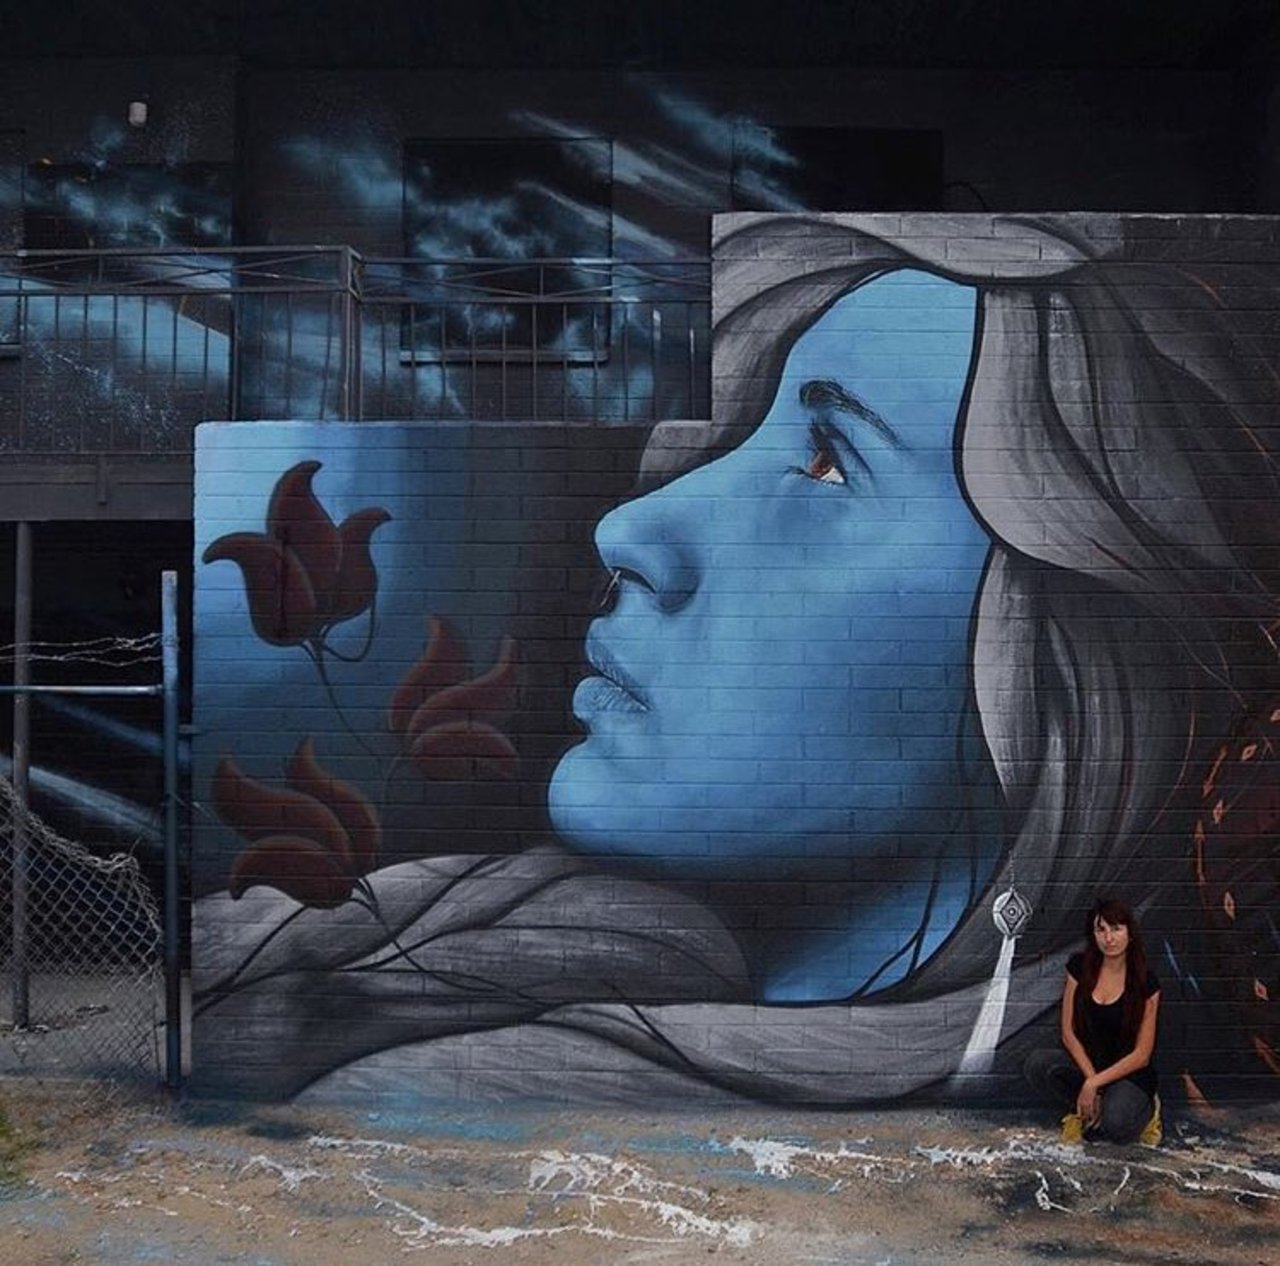 New Street Art by Mandragora Leticia  Las Vegas #art #mural #graffiti #streetart https://t.co/FXgWFXVle0